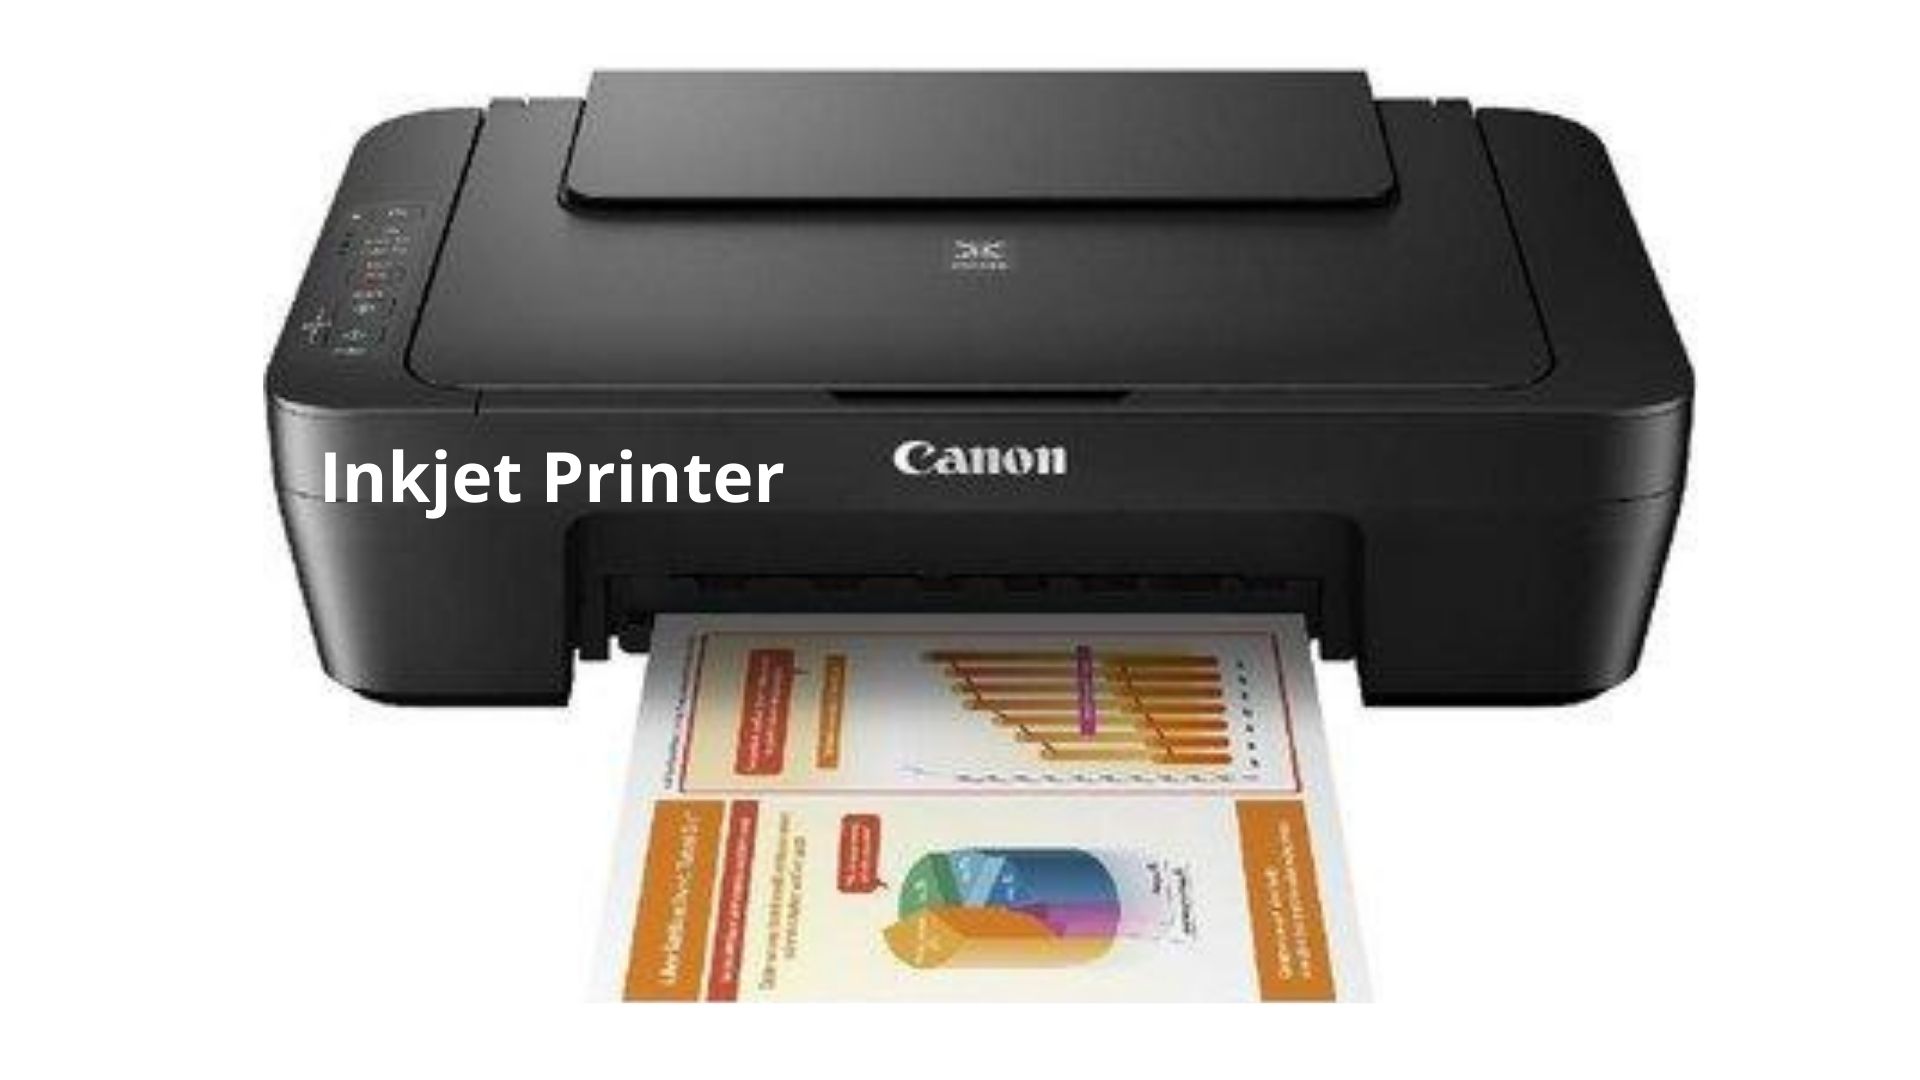 6 Advantages and Disadvantages of Inkjet Printer